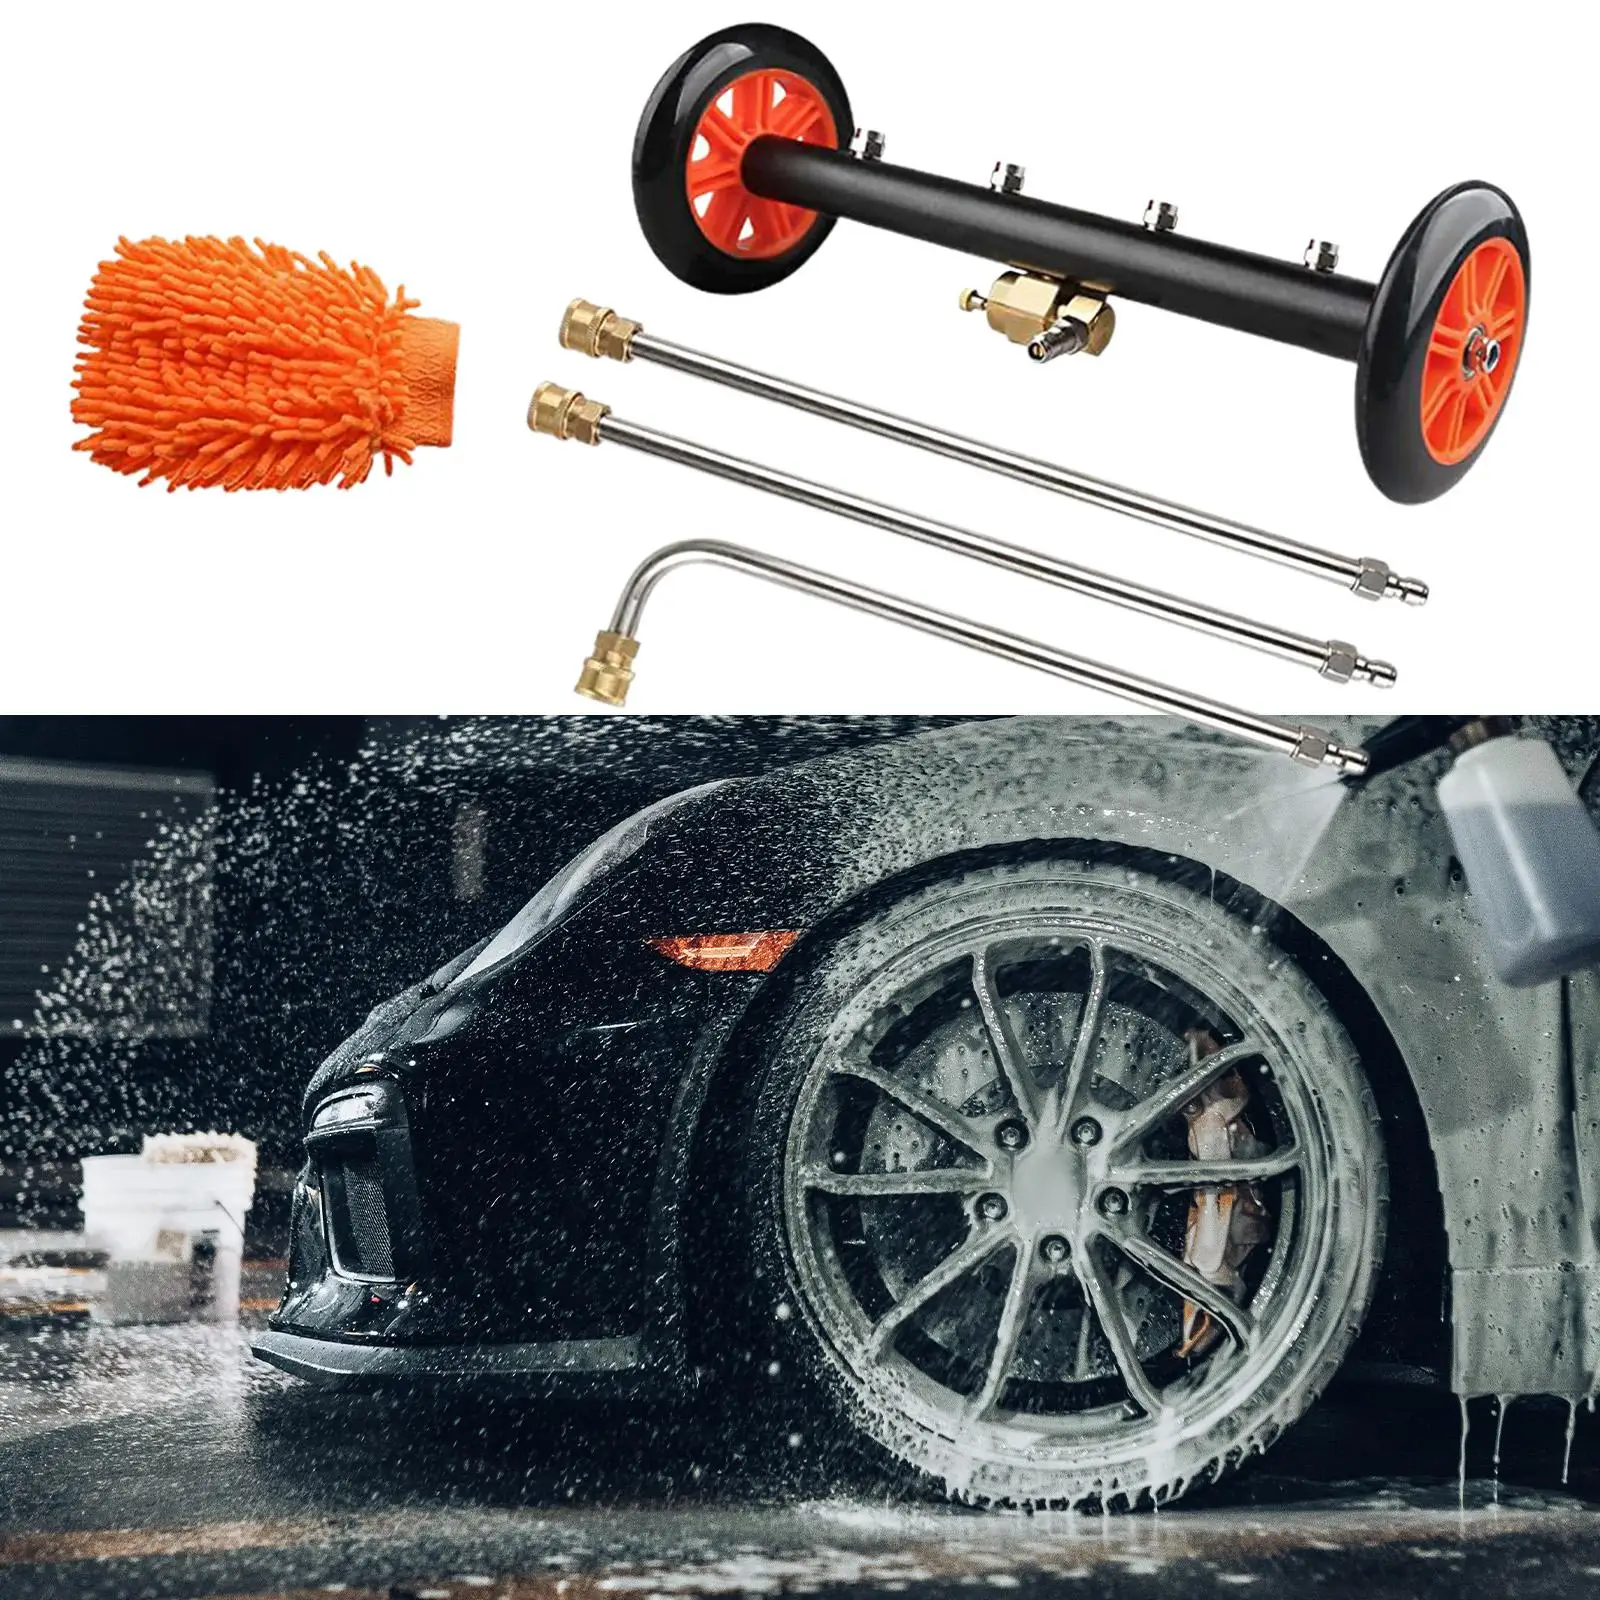 Multifunctional Power Washer Surface Cleaner Dual Purpose Adjustable Undercarriage Water Broom for Debris Poolsides Sidewalks